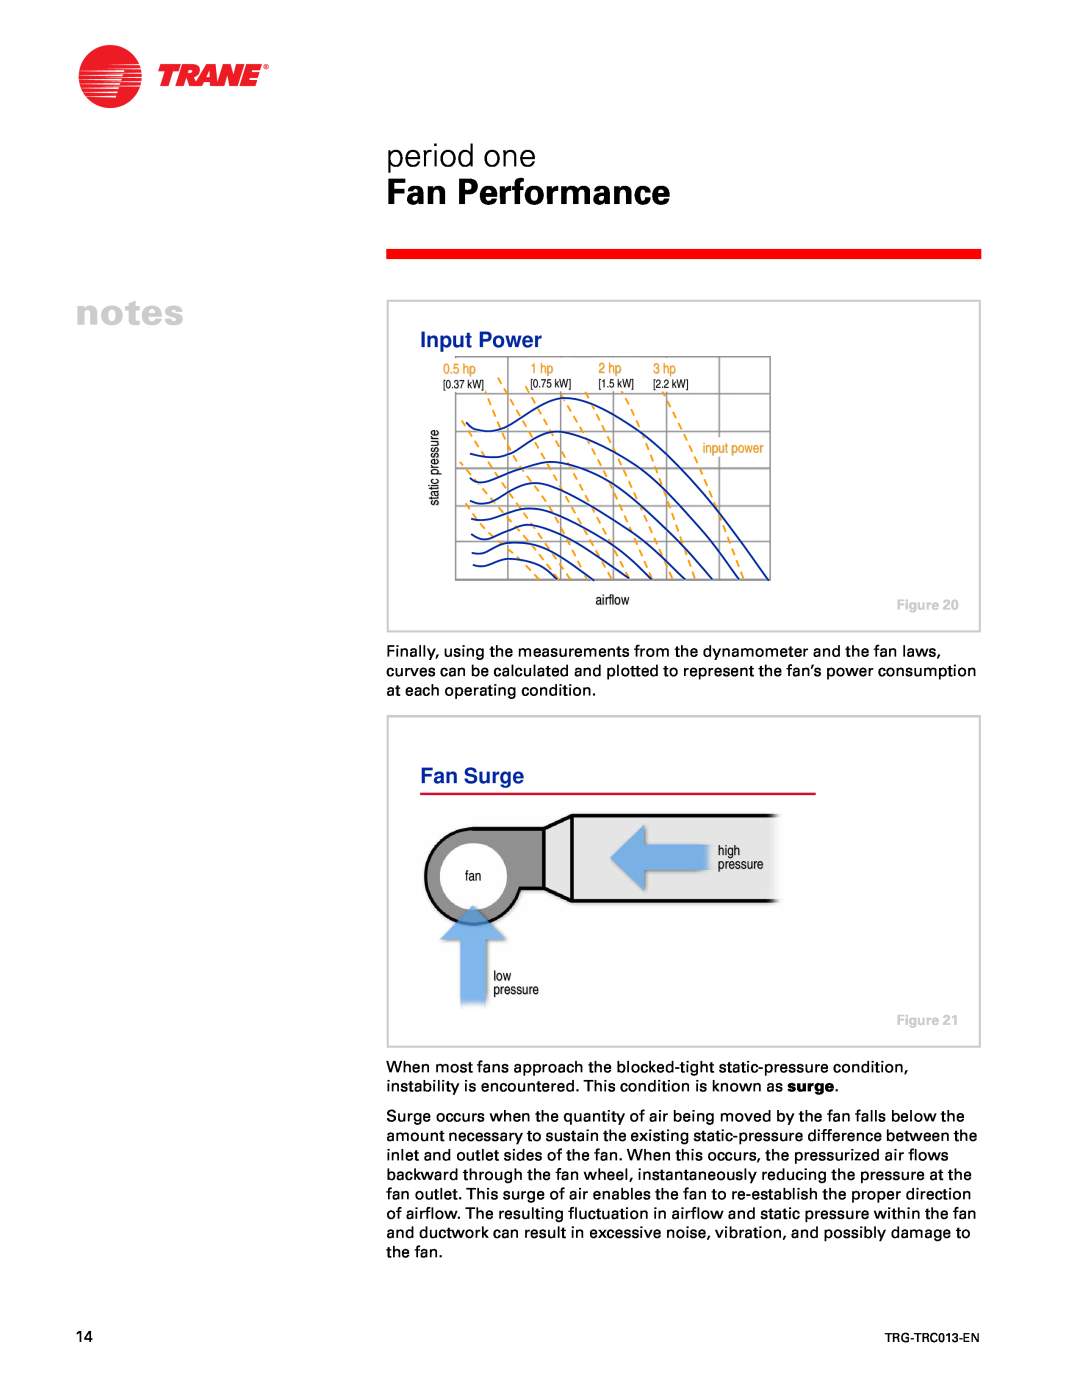 Trane TRG-TRC013-EN manual Input Power, Fan Surge 